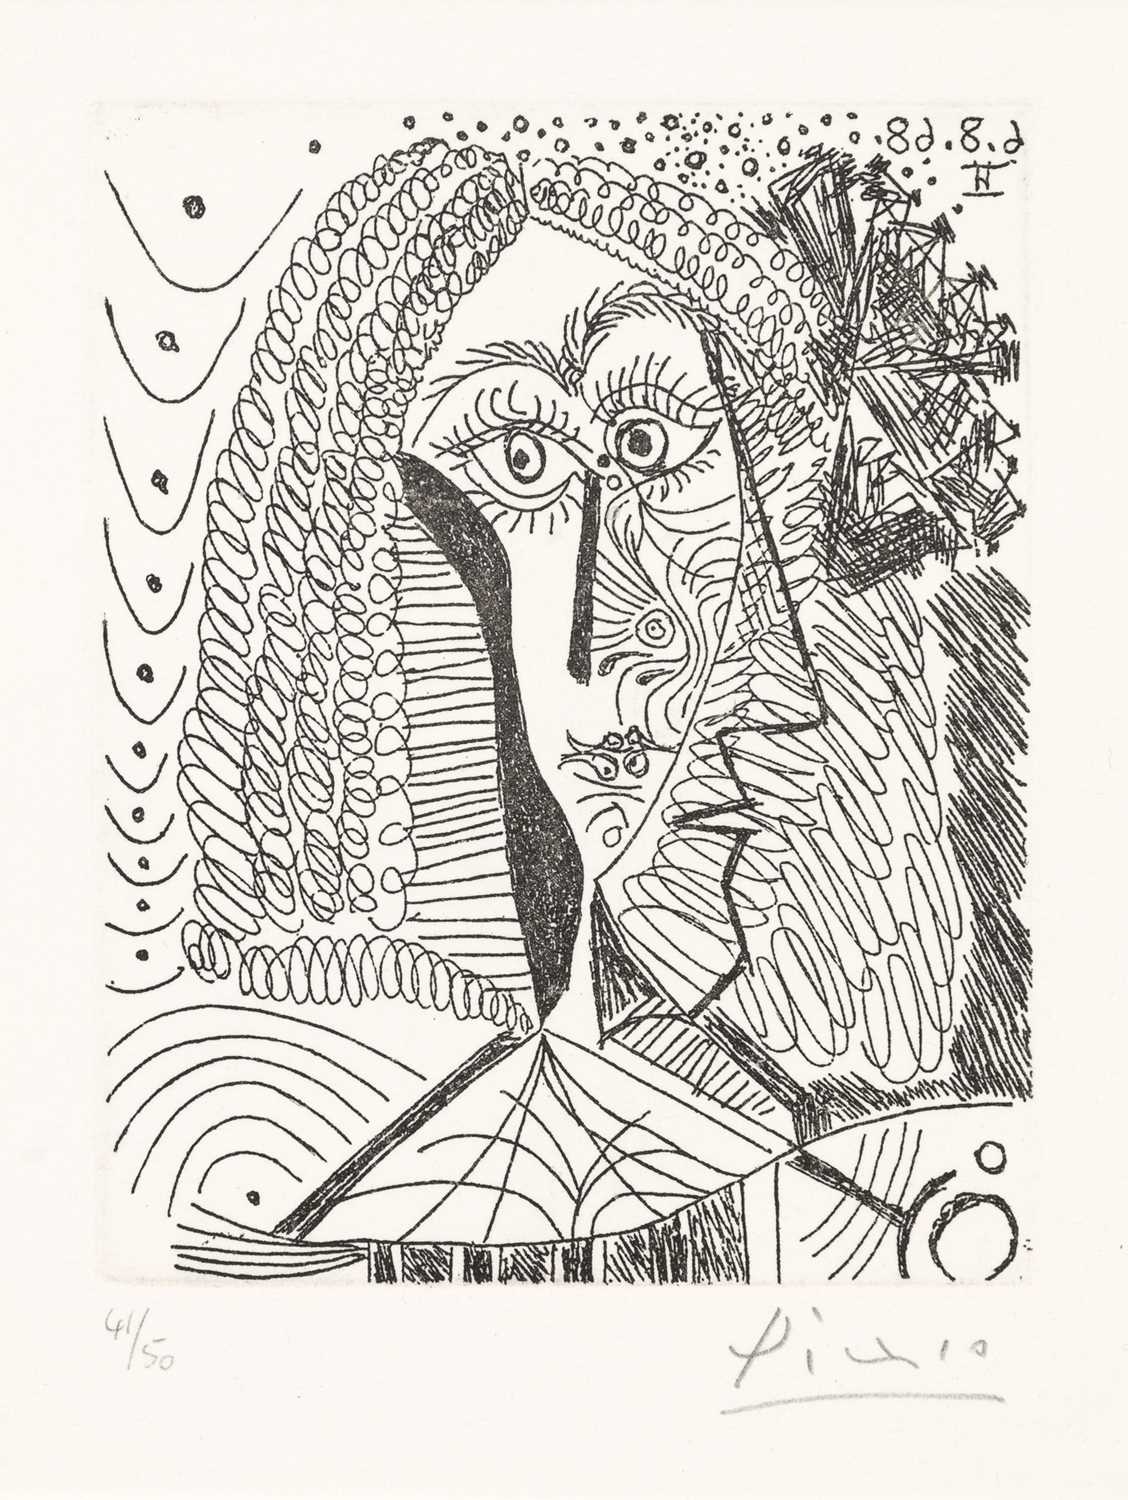 Lot 113 - Pablo Picasso (1881-1973)